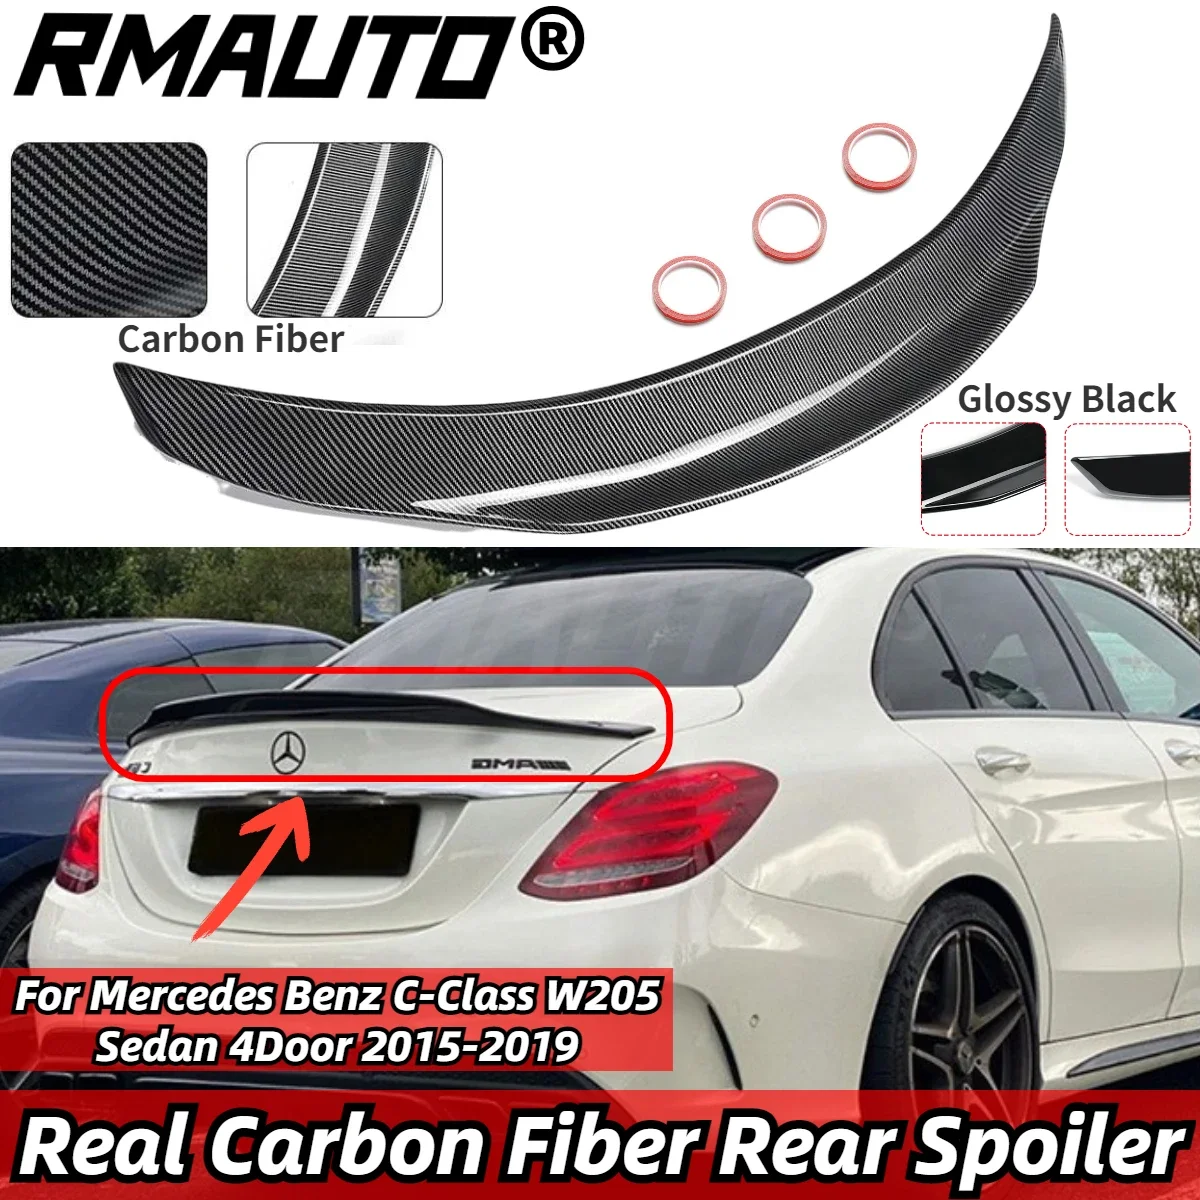 

For Mercedes Benz C-Class W205 PSM Spoiler Real Carbon Fiber Rear Trunk Spoiler Wing Body Kit Sedan 2015-2019 Exterior Part